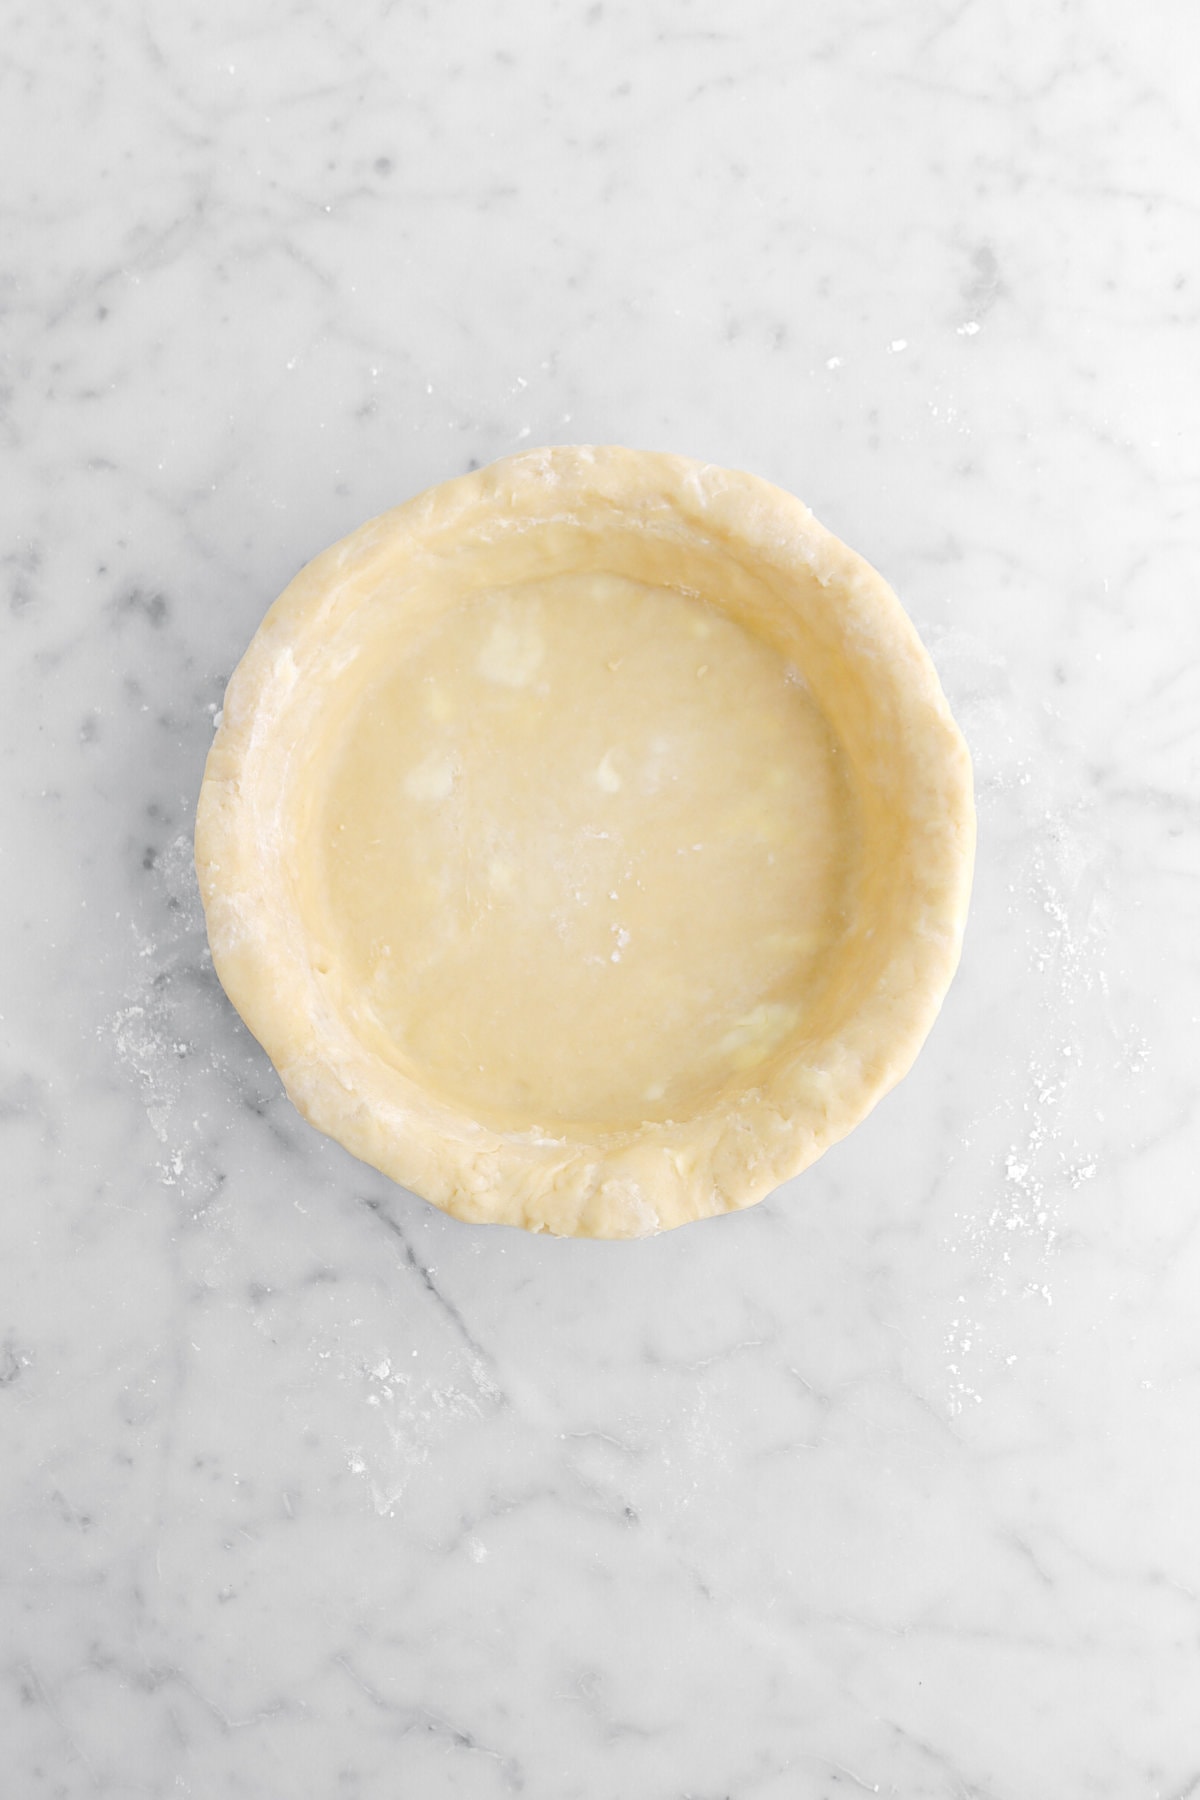 pie dough in pan.